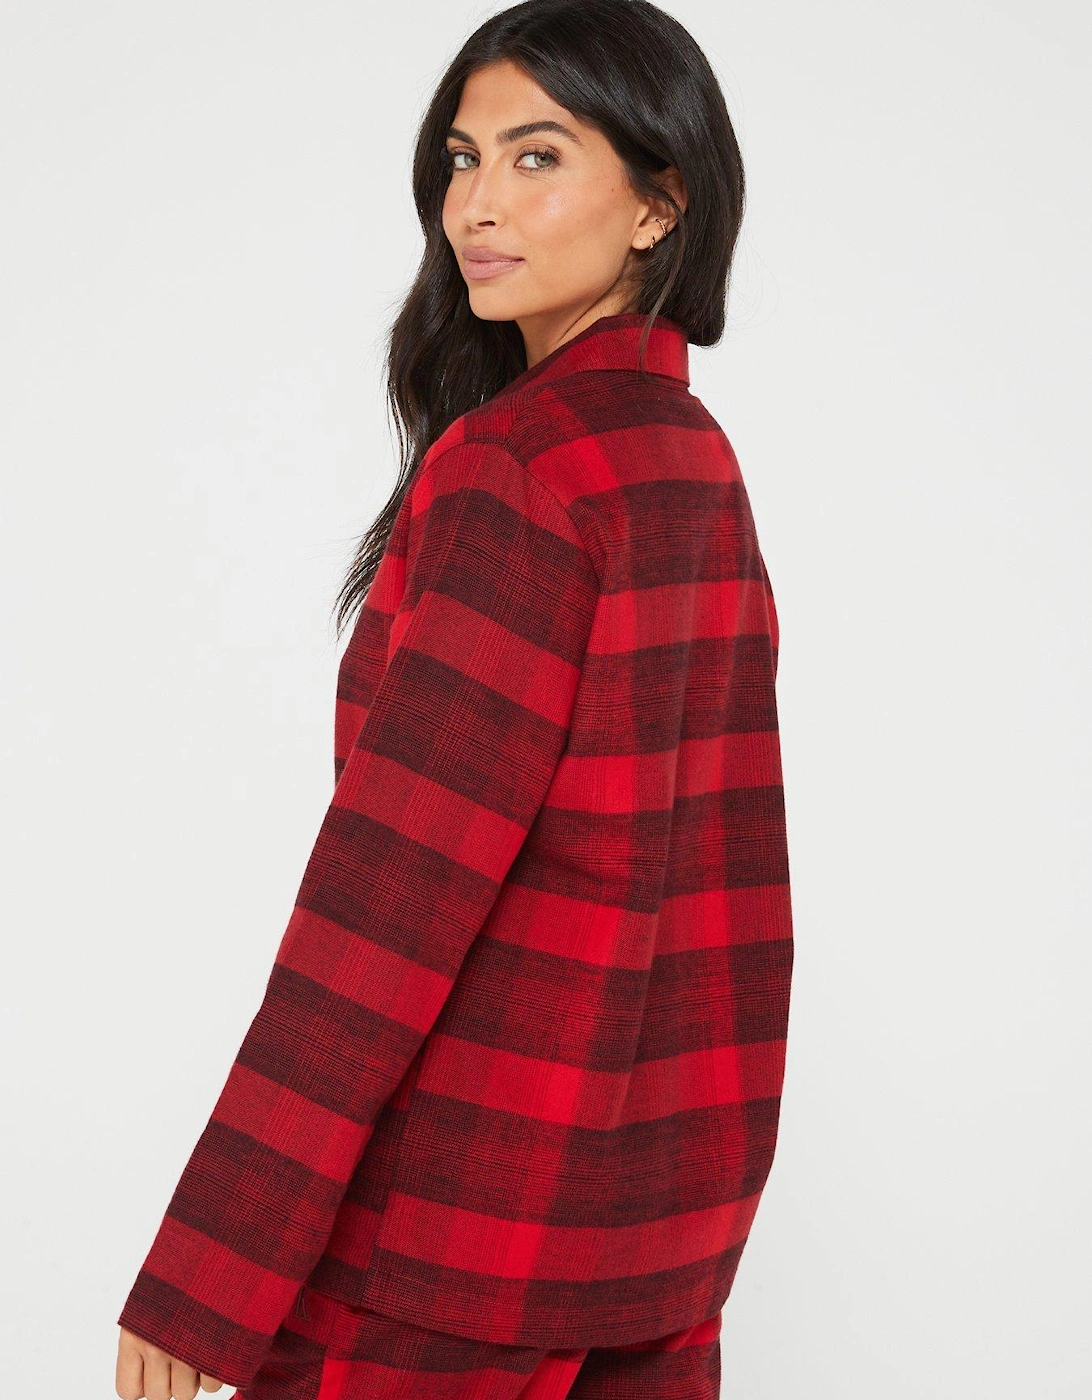 Flannel Long Sleeve Check Pyjama Shirt - Red